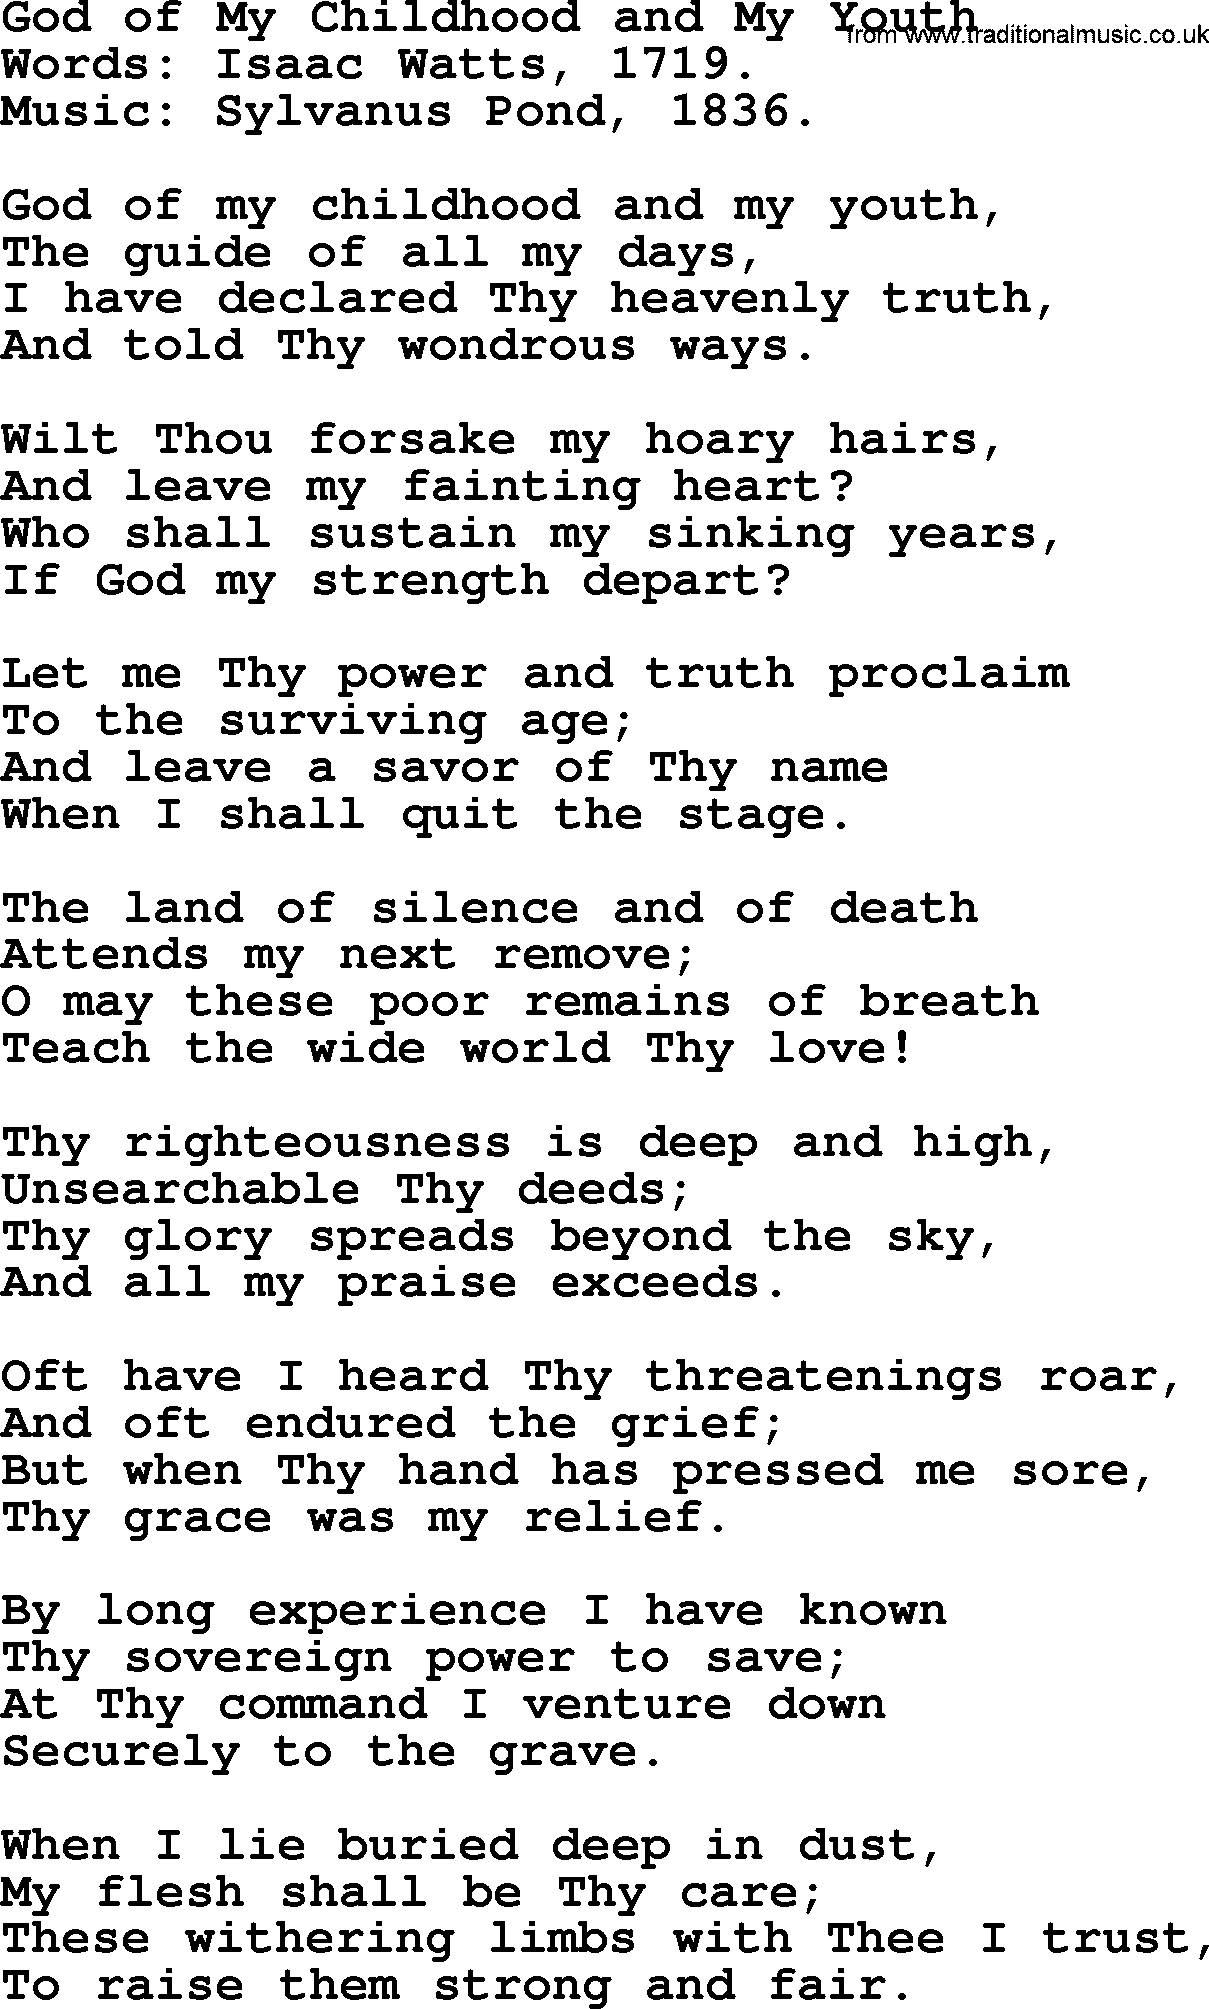 Isaac Watts Christian hymn: God of My Childhood and My Youth- lyricss